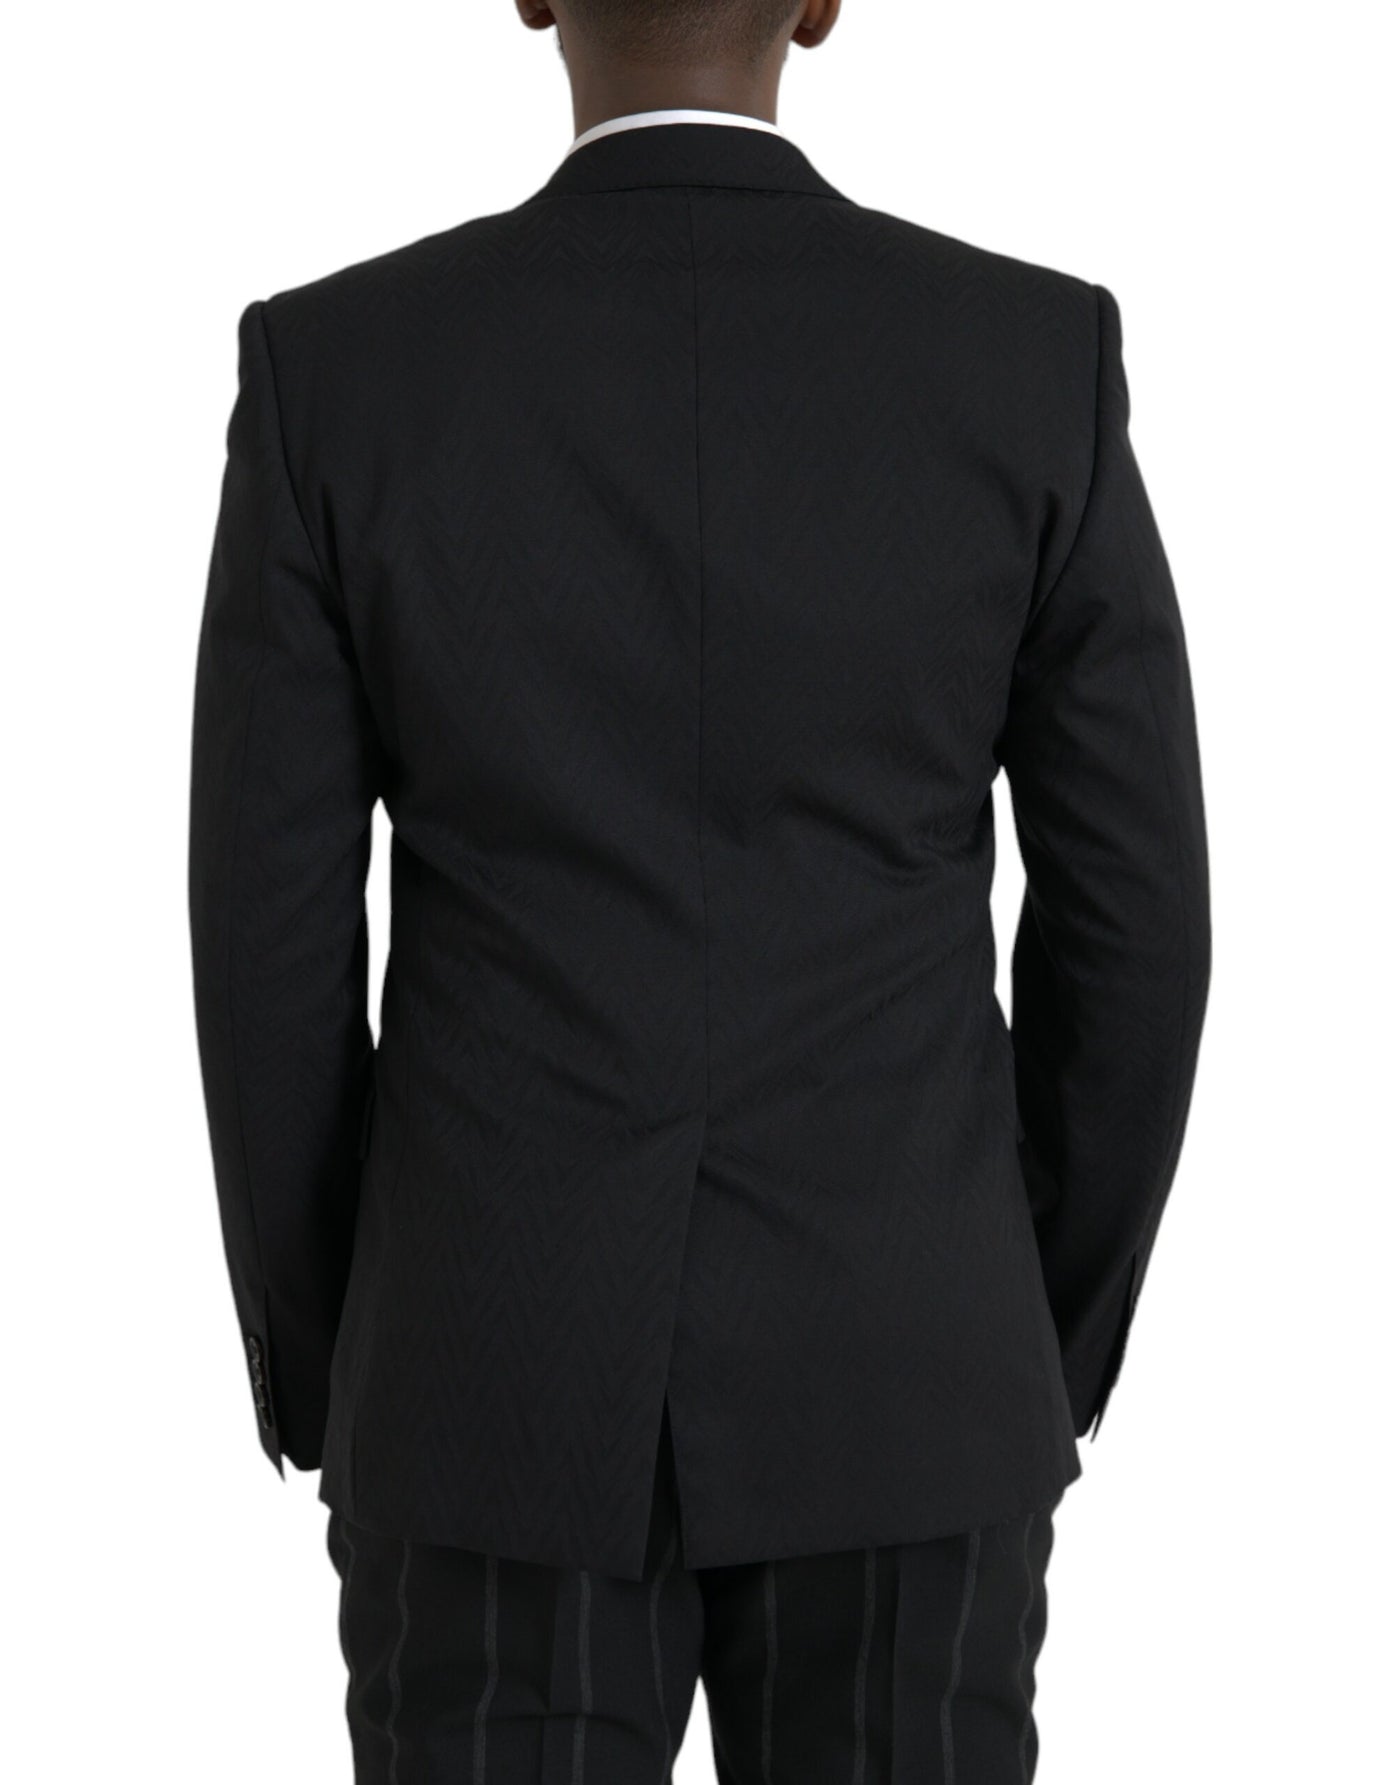 Black MARTINI Slim Fit Jacket Coat Blazer